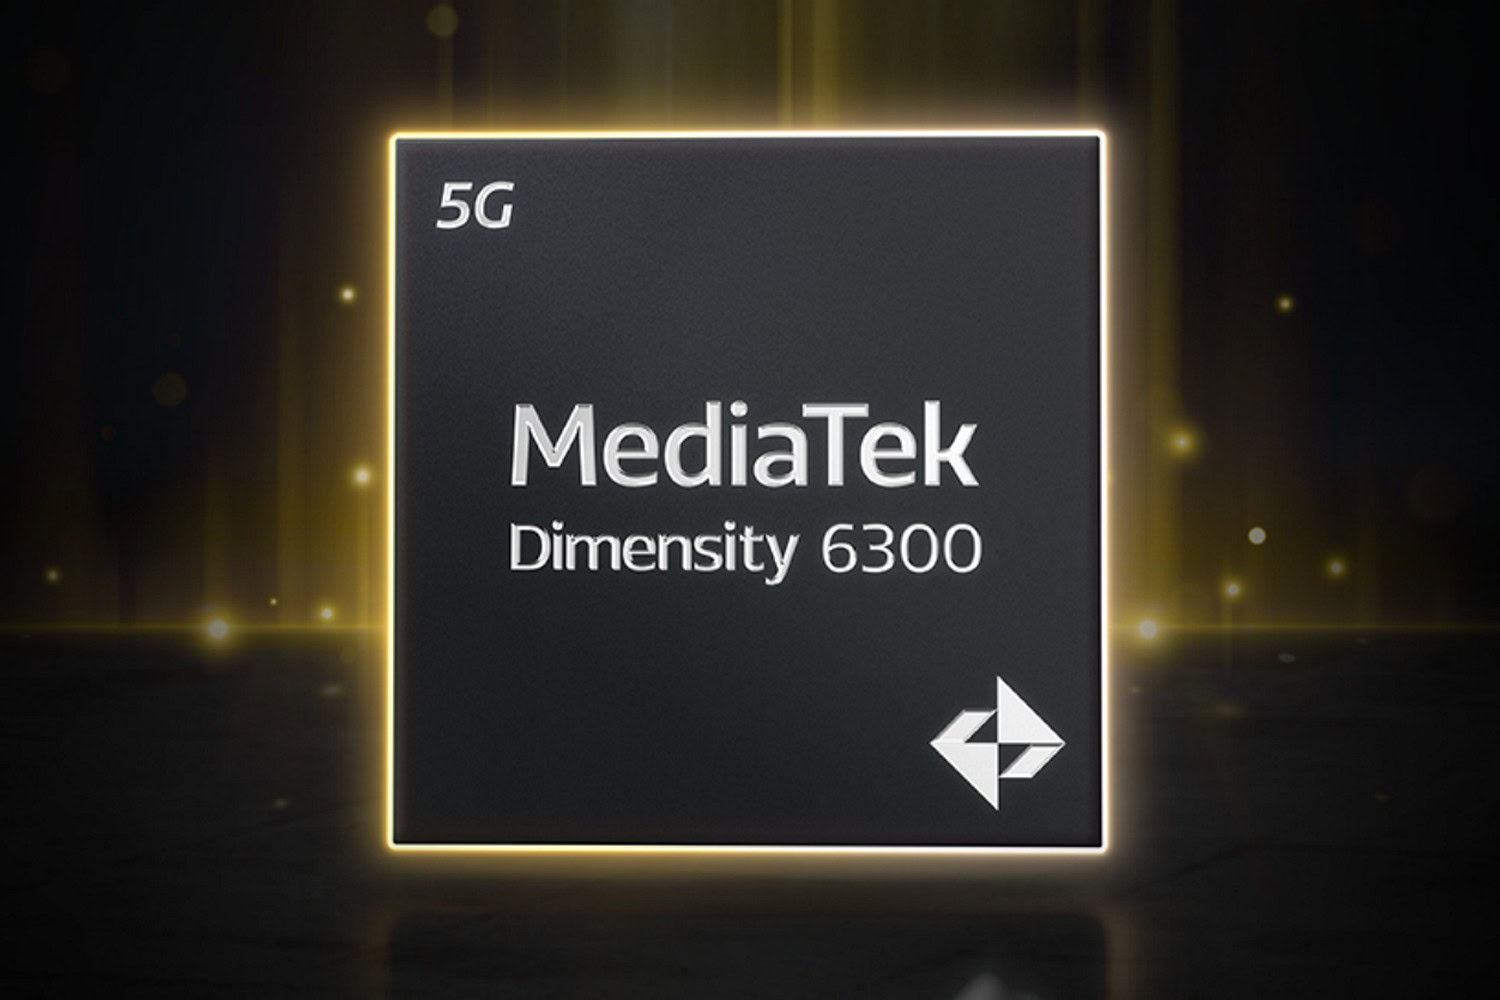 MediaTek Dimensity 6300 Unveiled - 10% Boost in Performance Over Predecessor 8